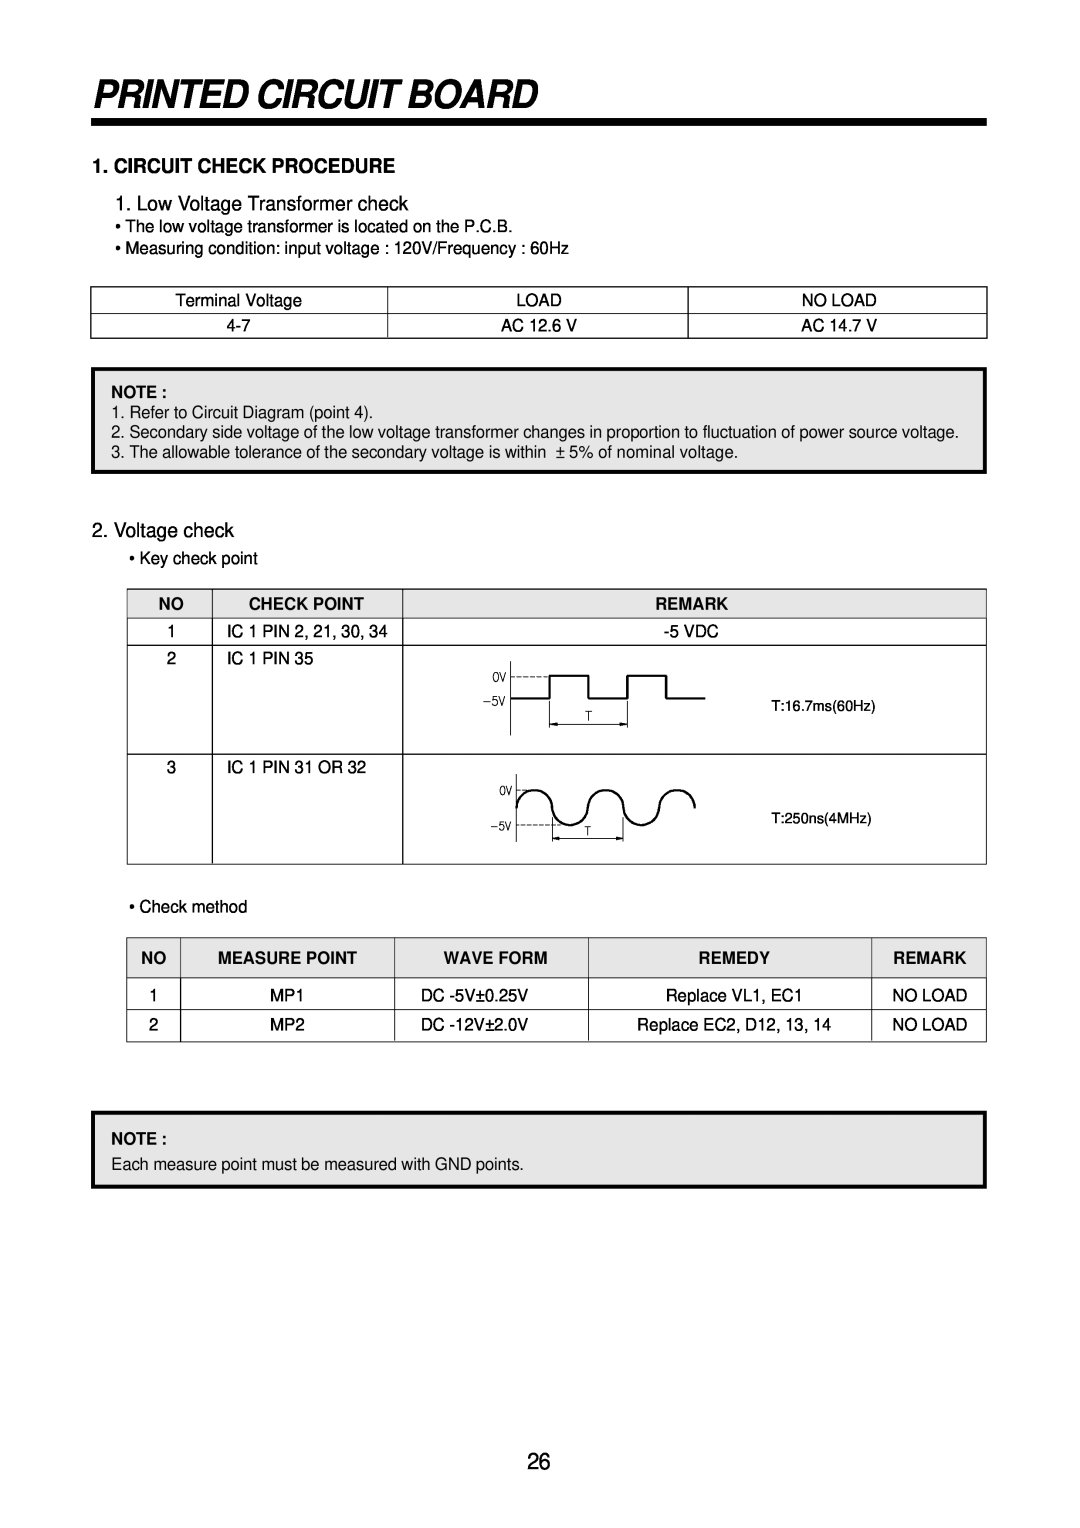 Daewoo KOR-861G0A Printed Circuit Board, Circuit Check Procedure, Low Voltage Transformer check, Voltage check, Wave Form 